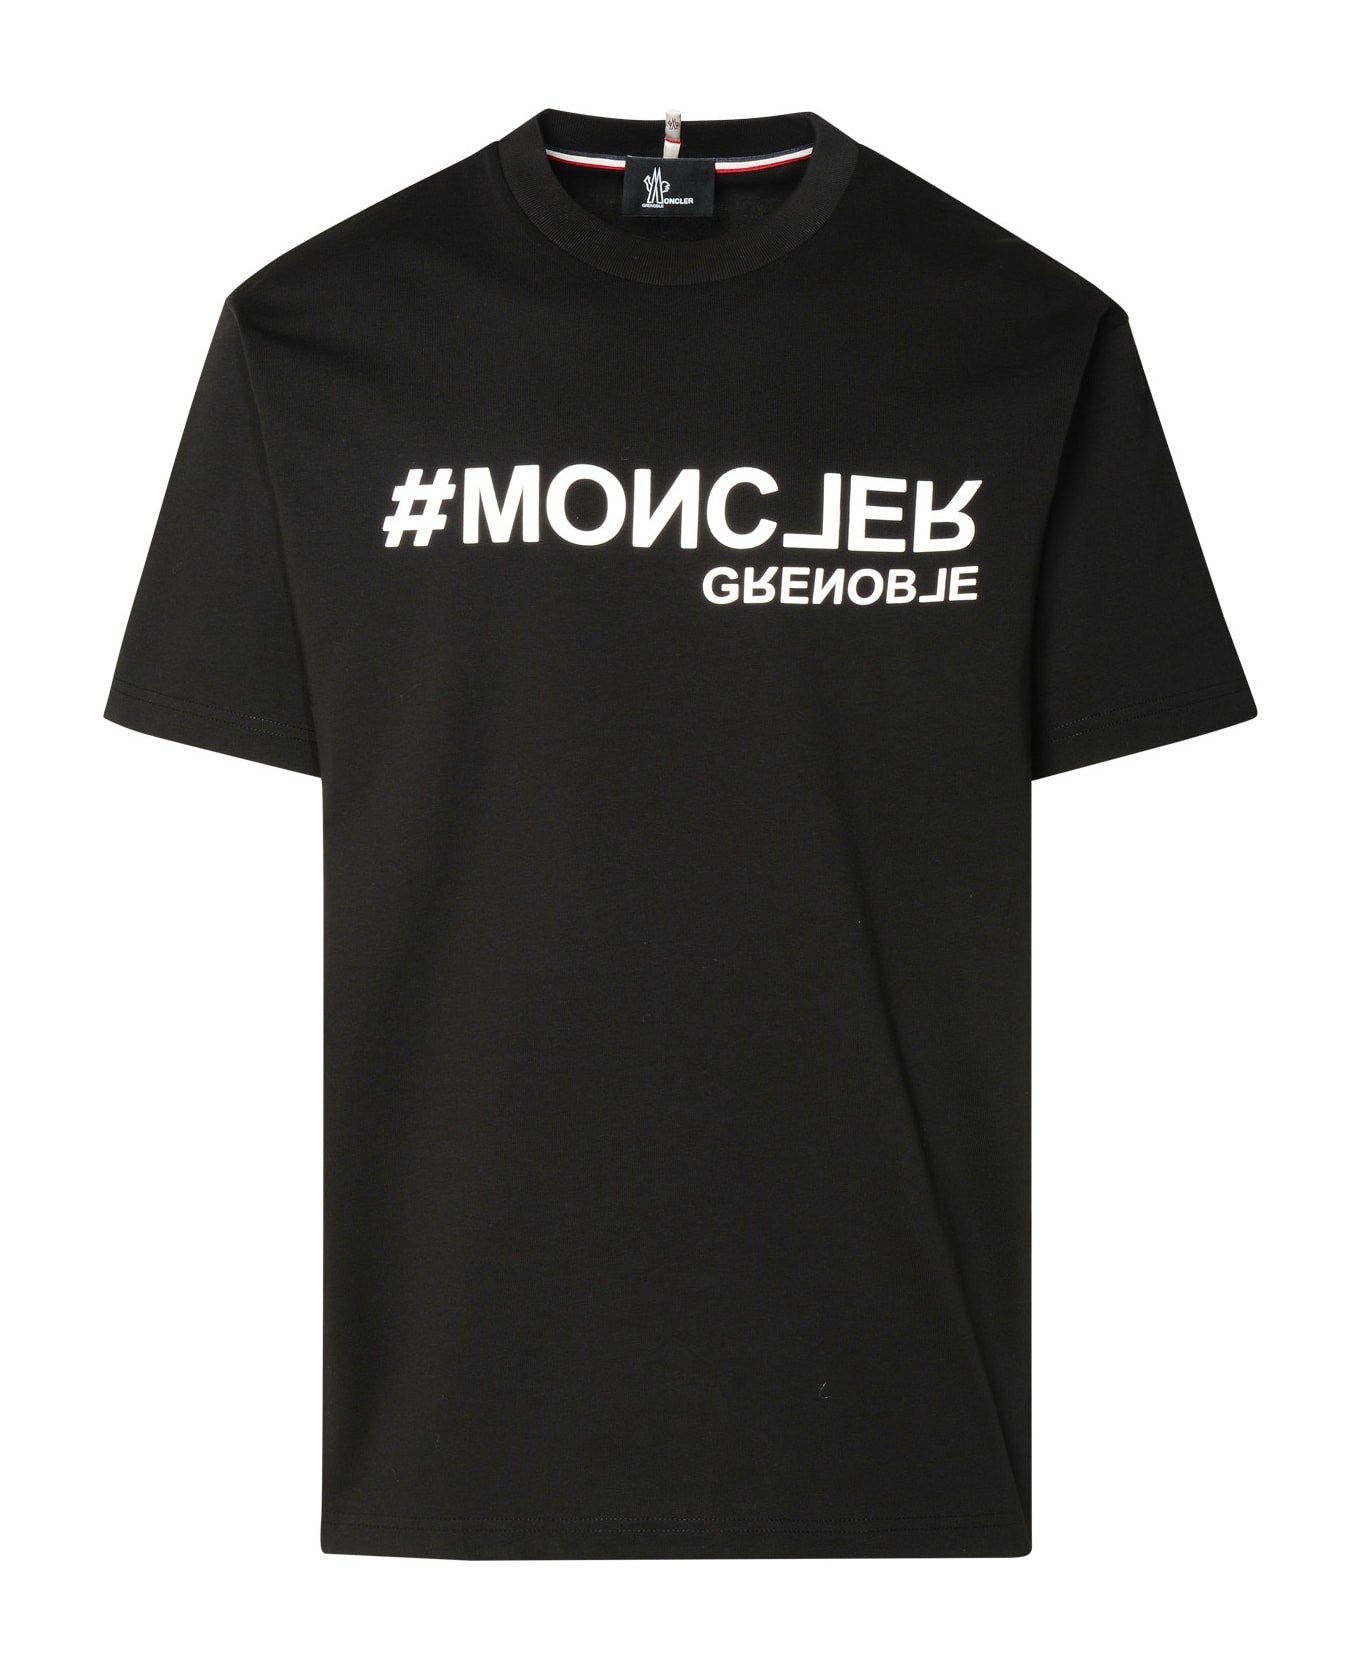 Moncler Grenoble Black Cotton T-shirt - Black Tシャツ